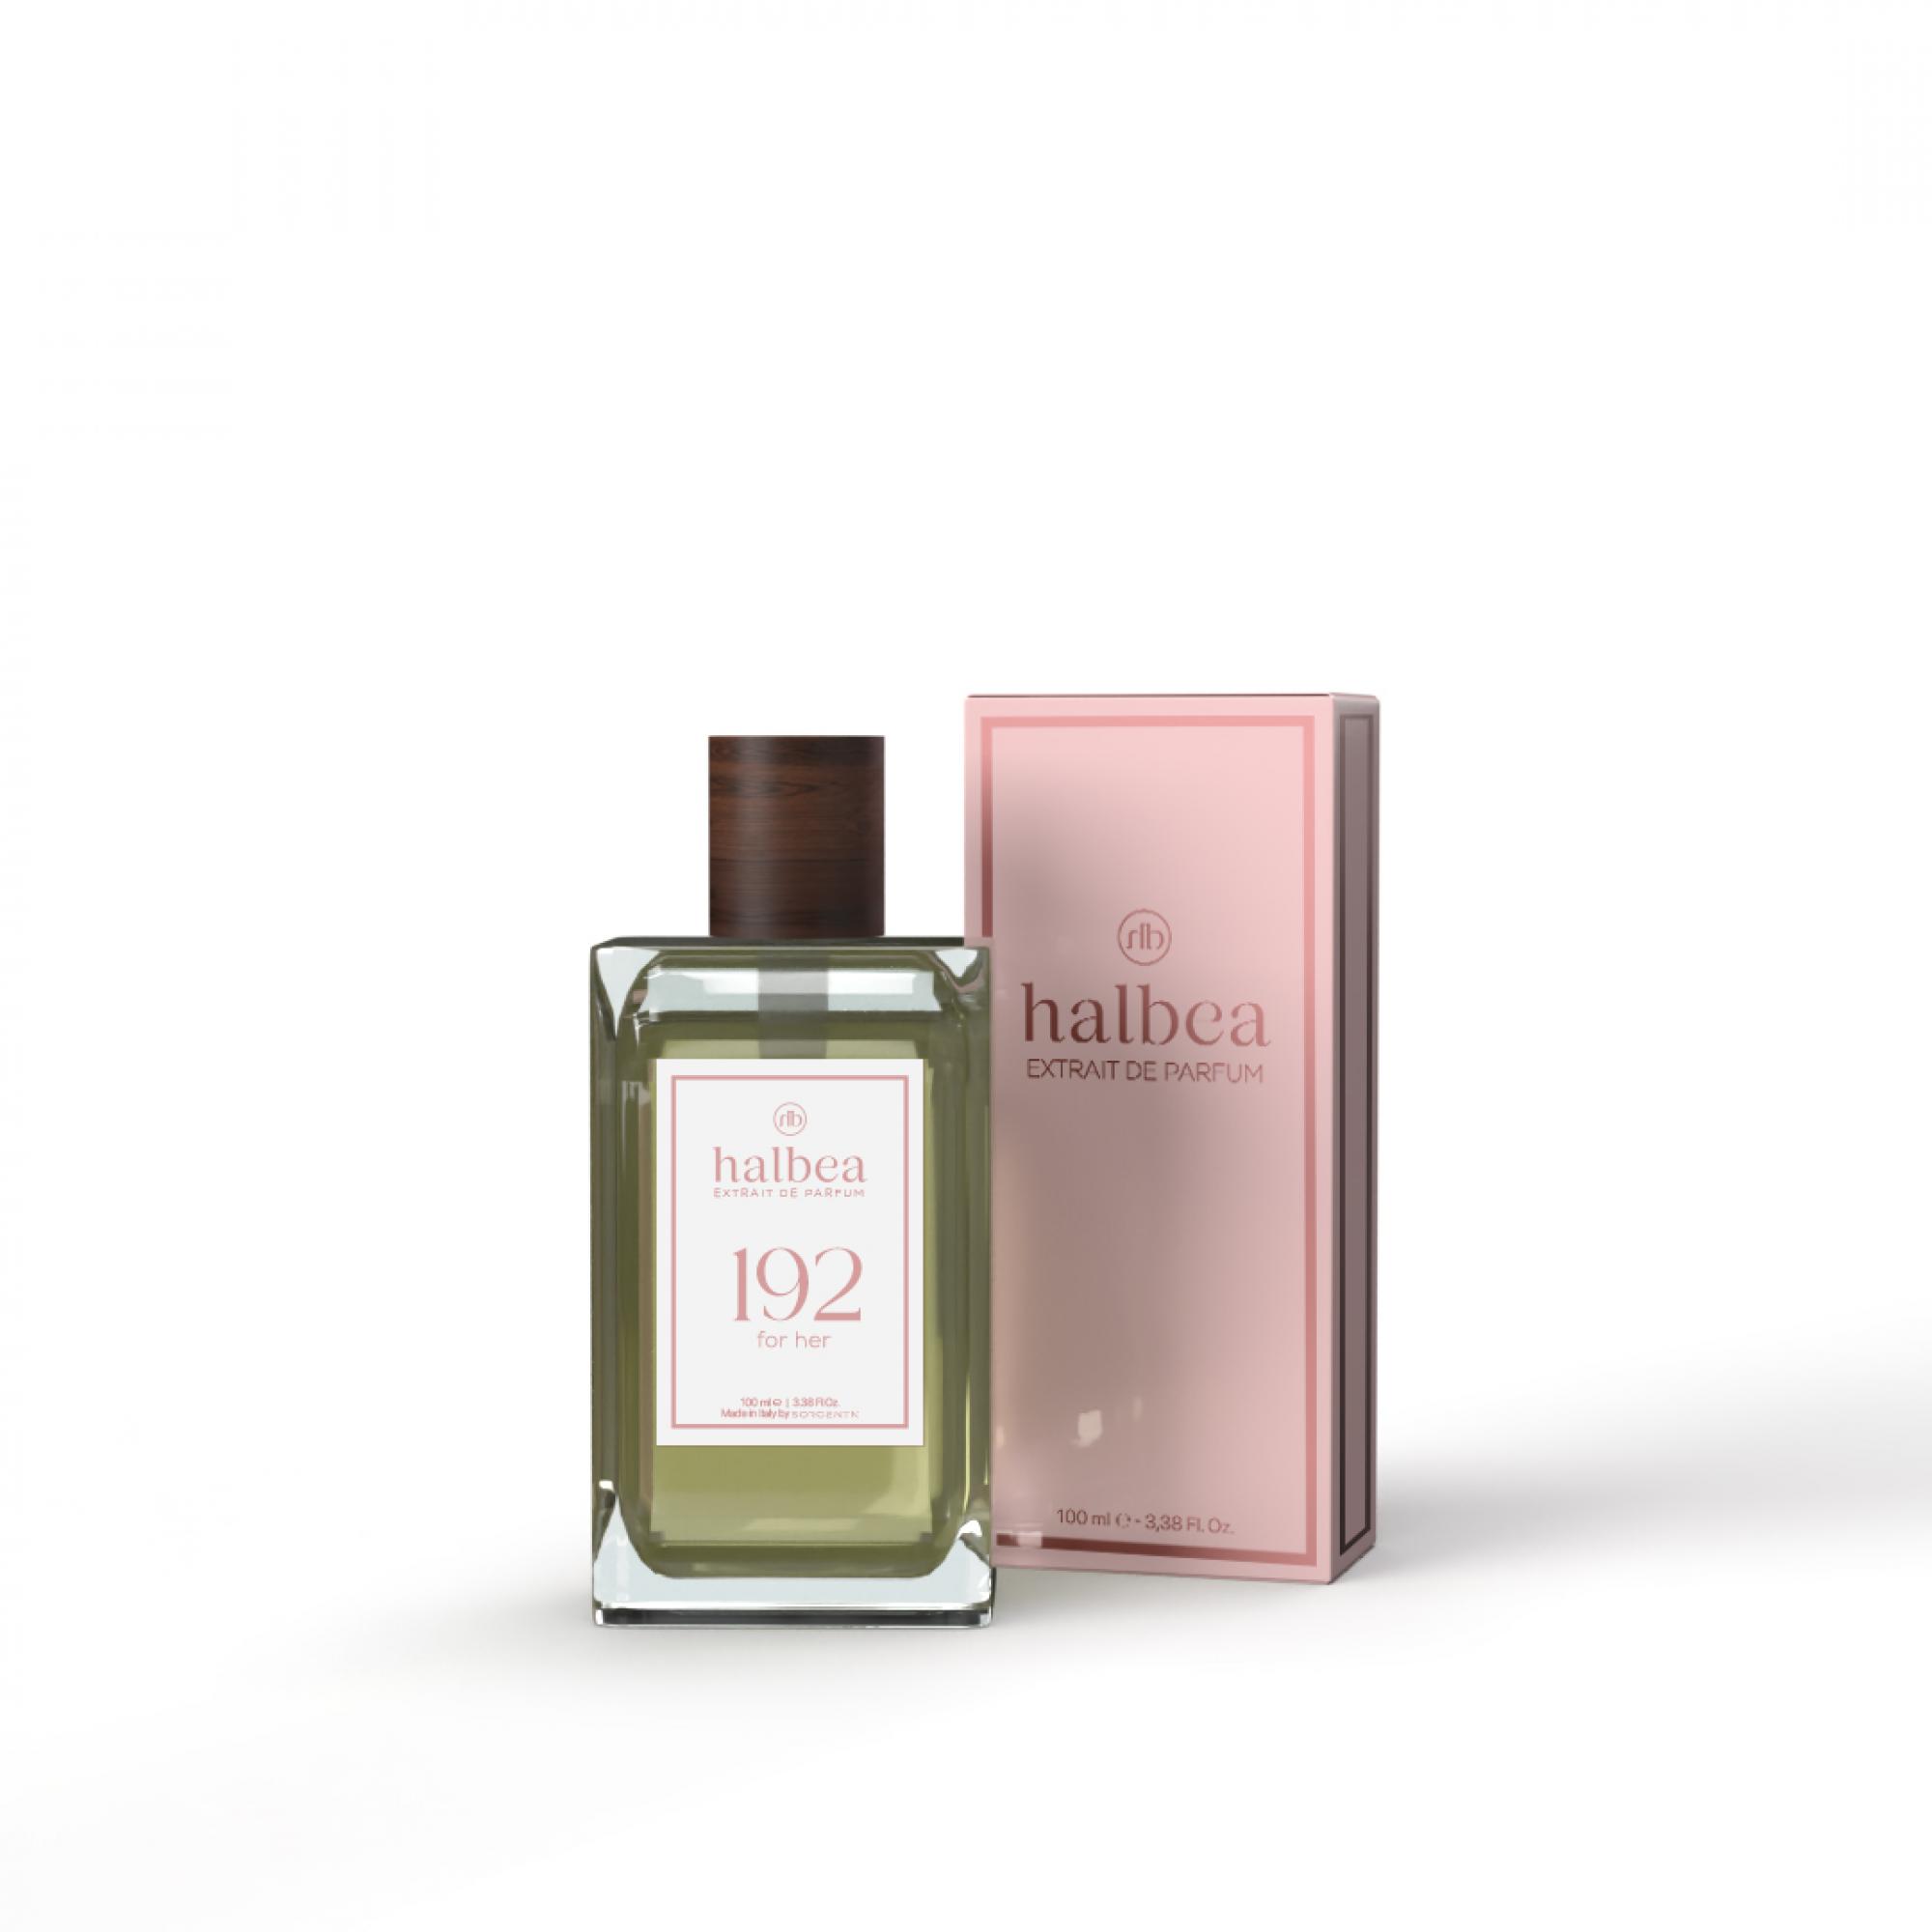 Halbea Parfum Nr. 192 insp. by Gucci Flora Sorgenta 100ml